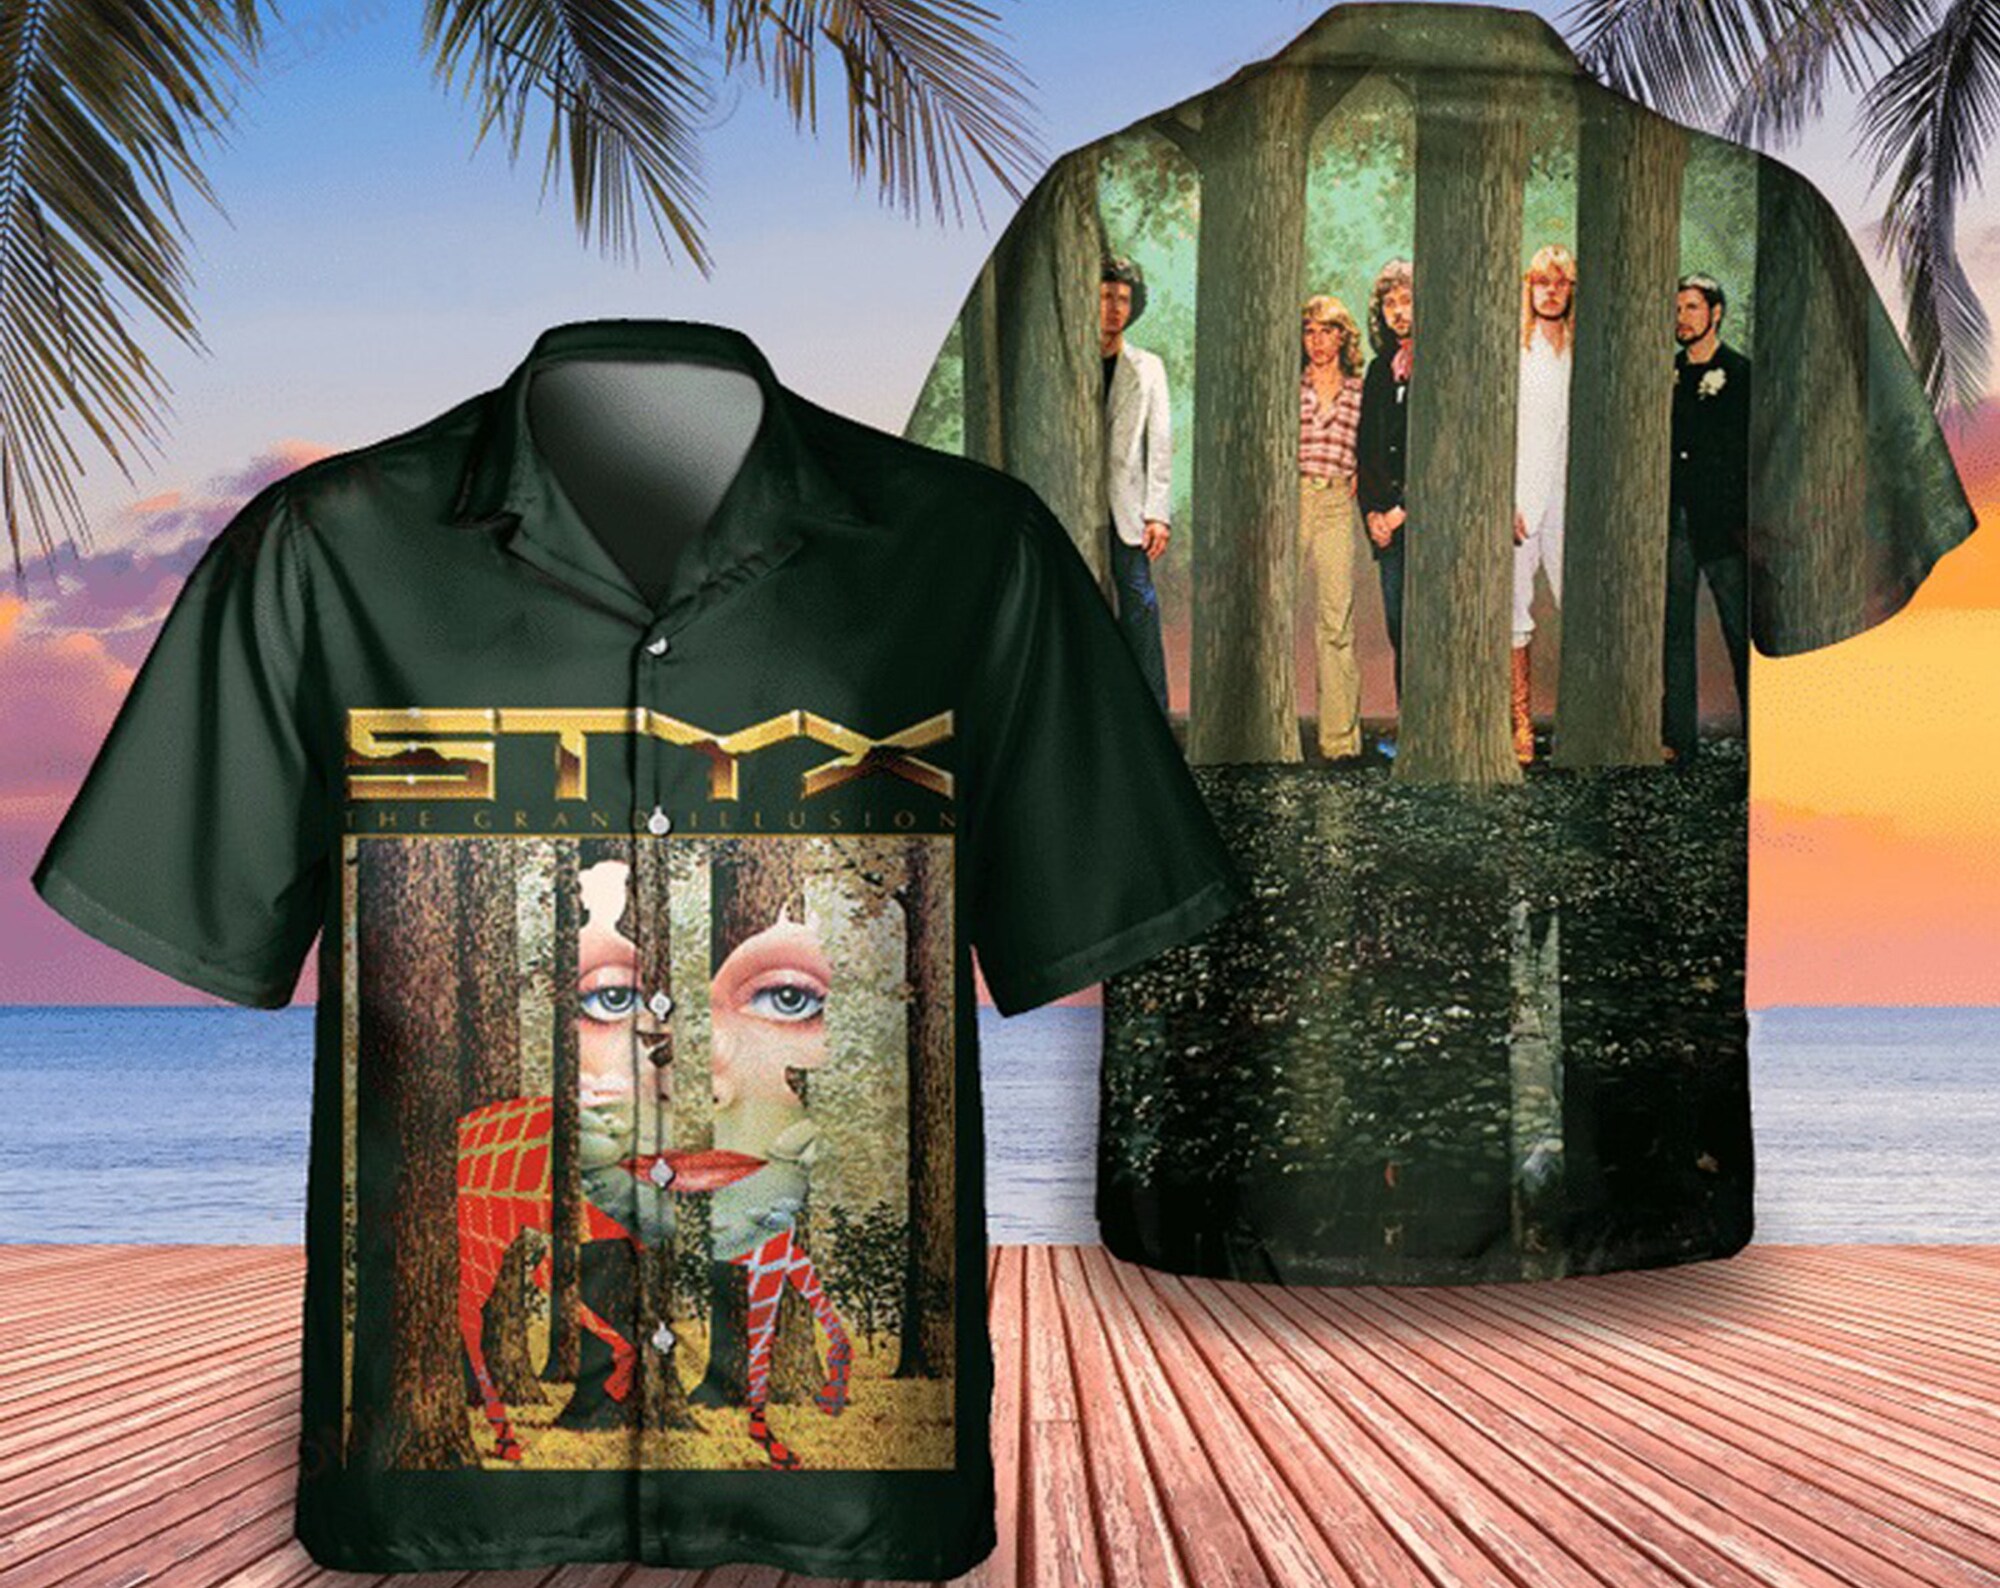 Styxs North American Tour 2022 Shirt, Styxs Shirt, Styxs Shirt 3D, Hawaiian ShirtVintage Rock Band T-Shirt,Music Shirt,Graphic Tee,Gift For Fan